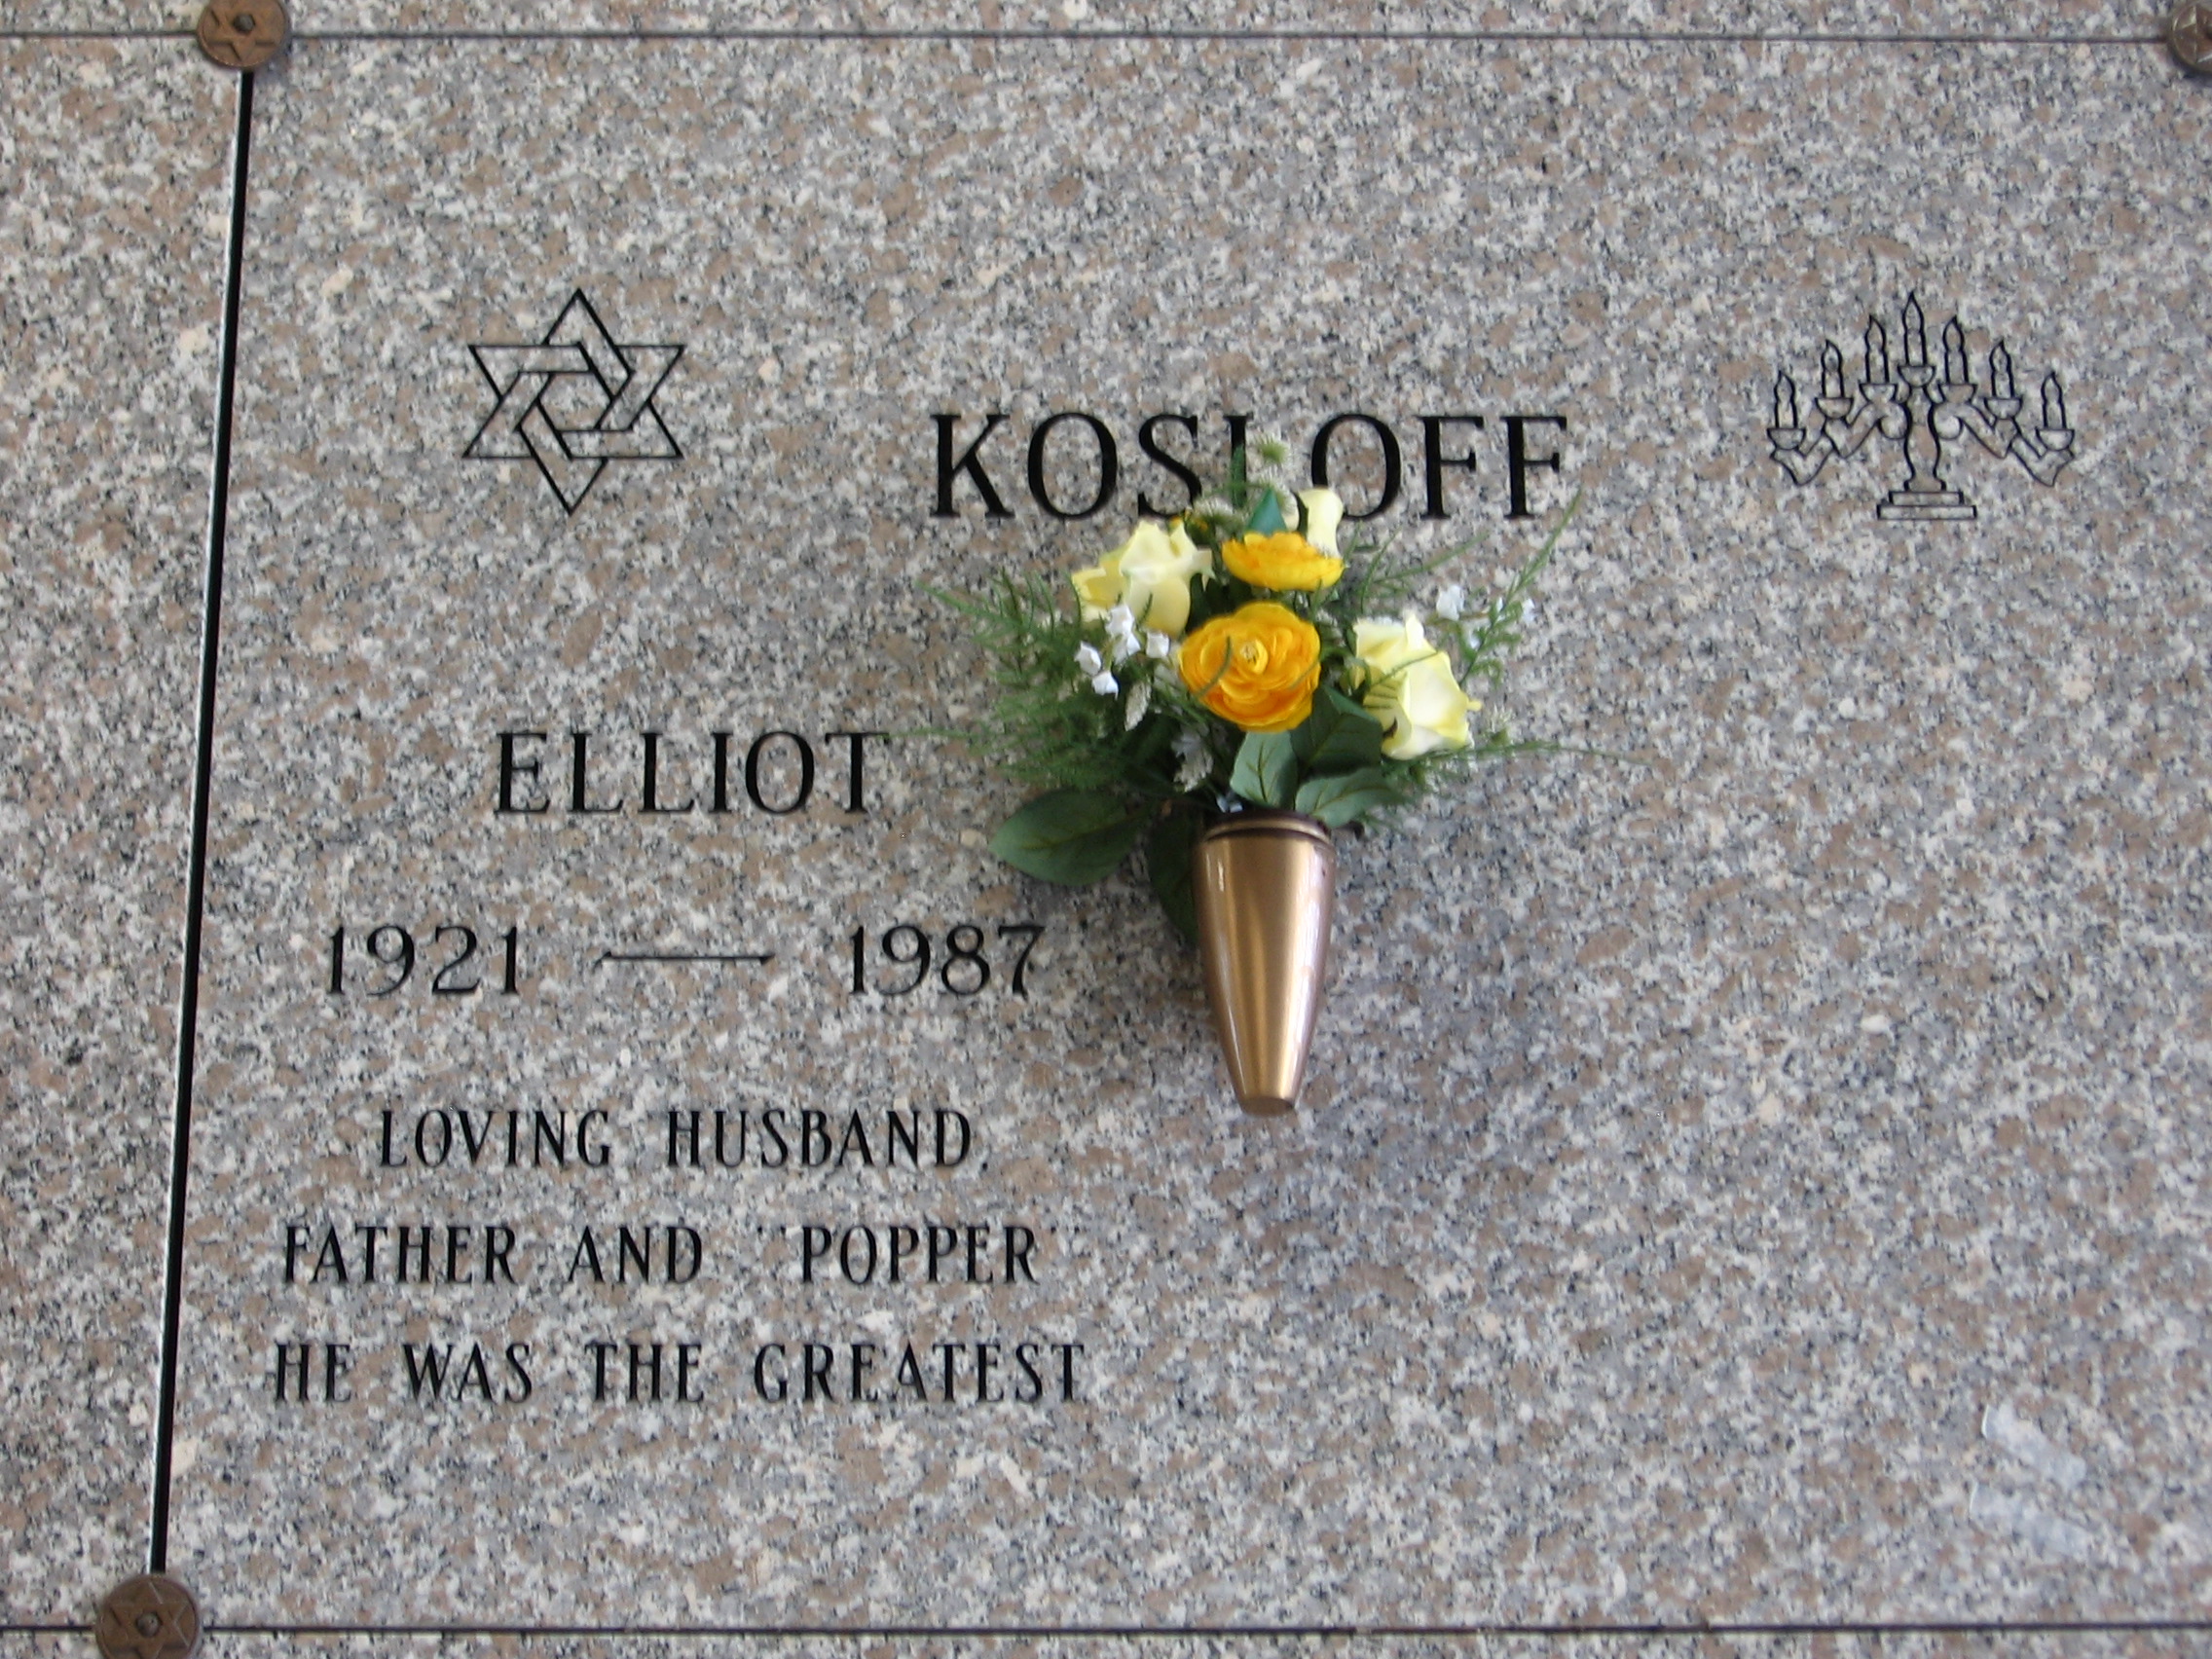 Elliot Kosloff